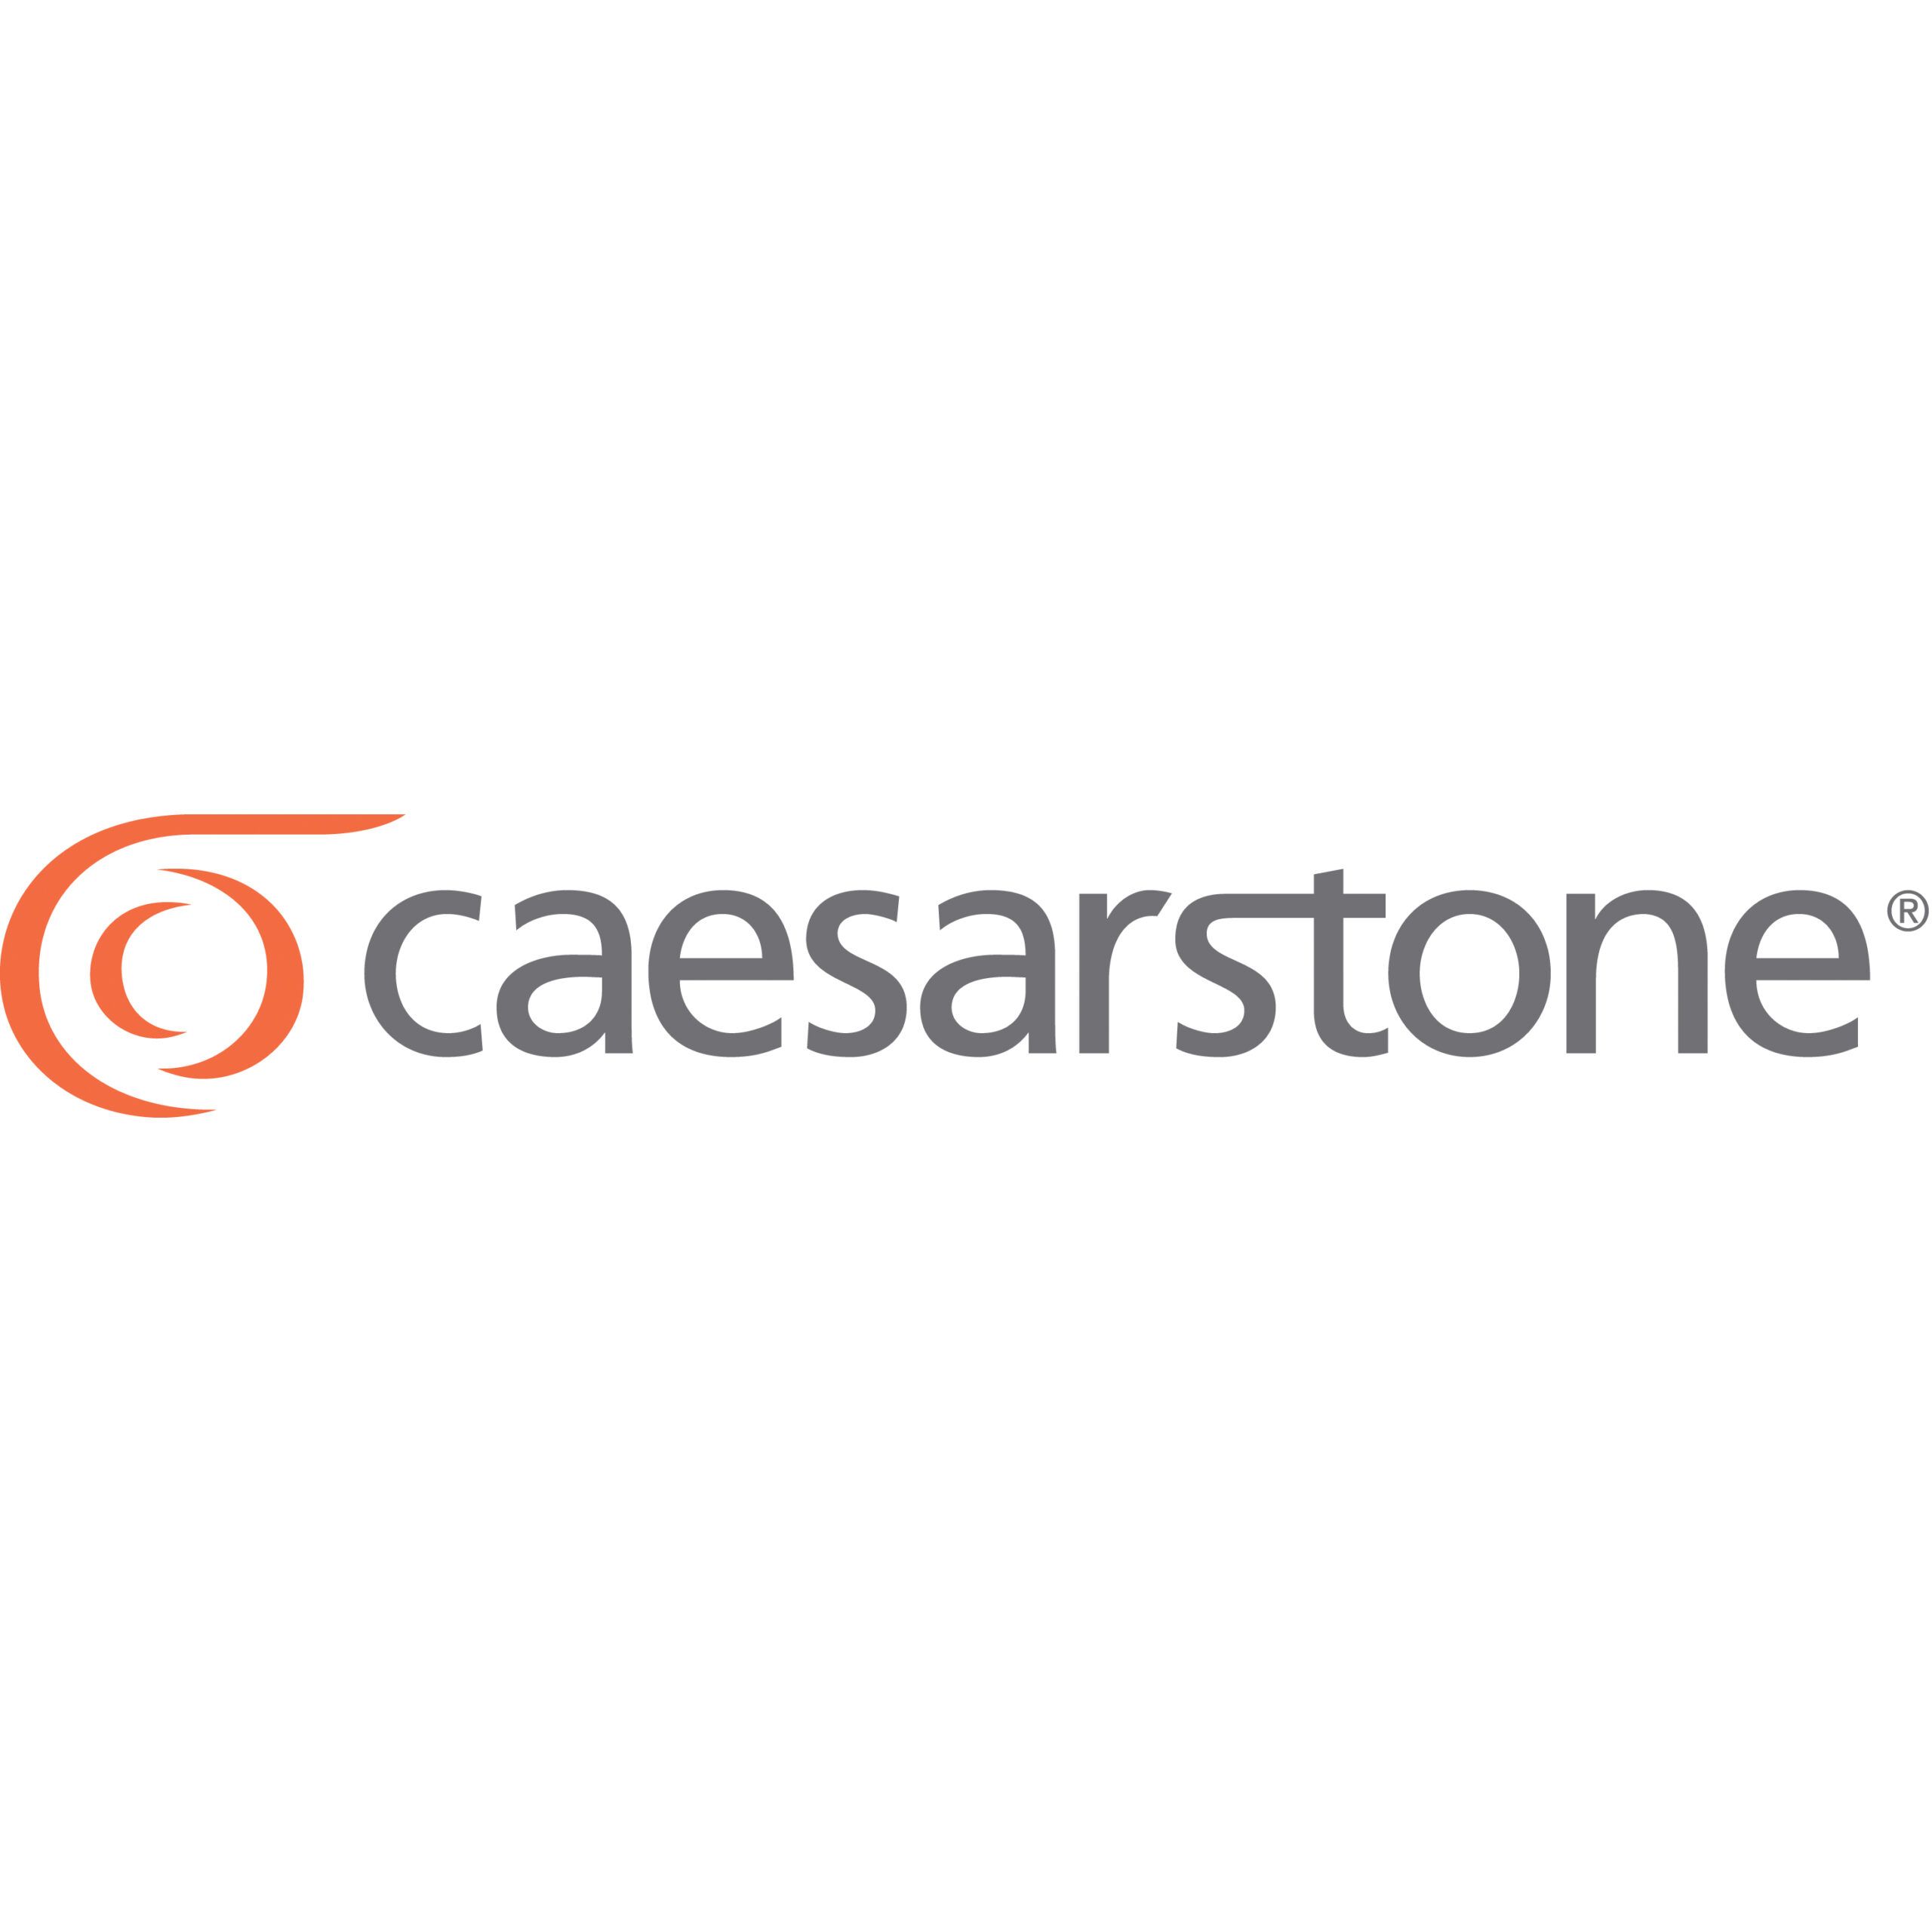 Caesarstone_logo_terracotta